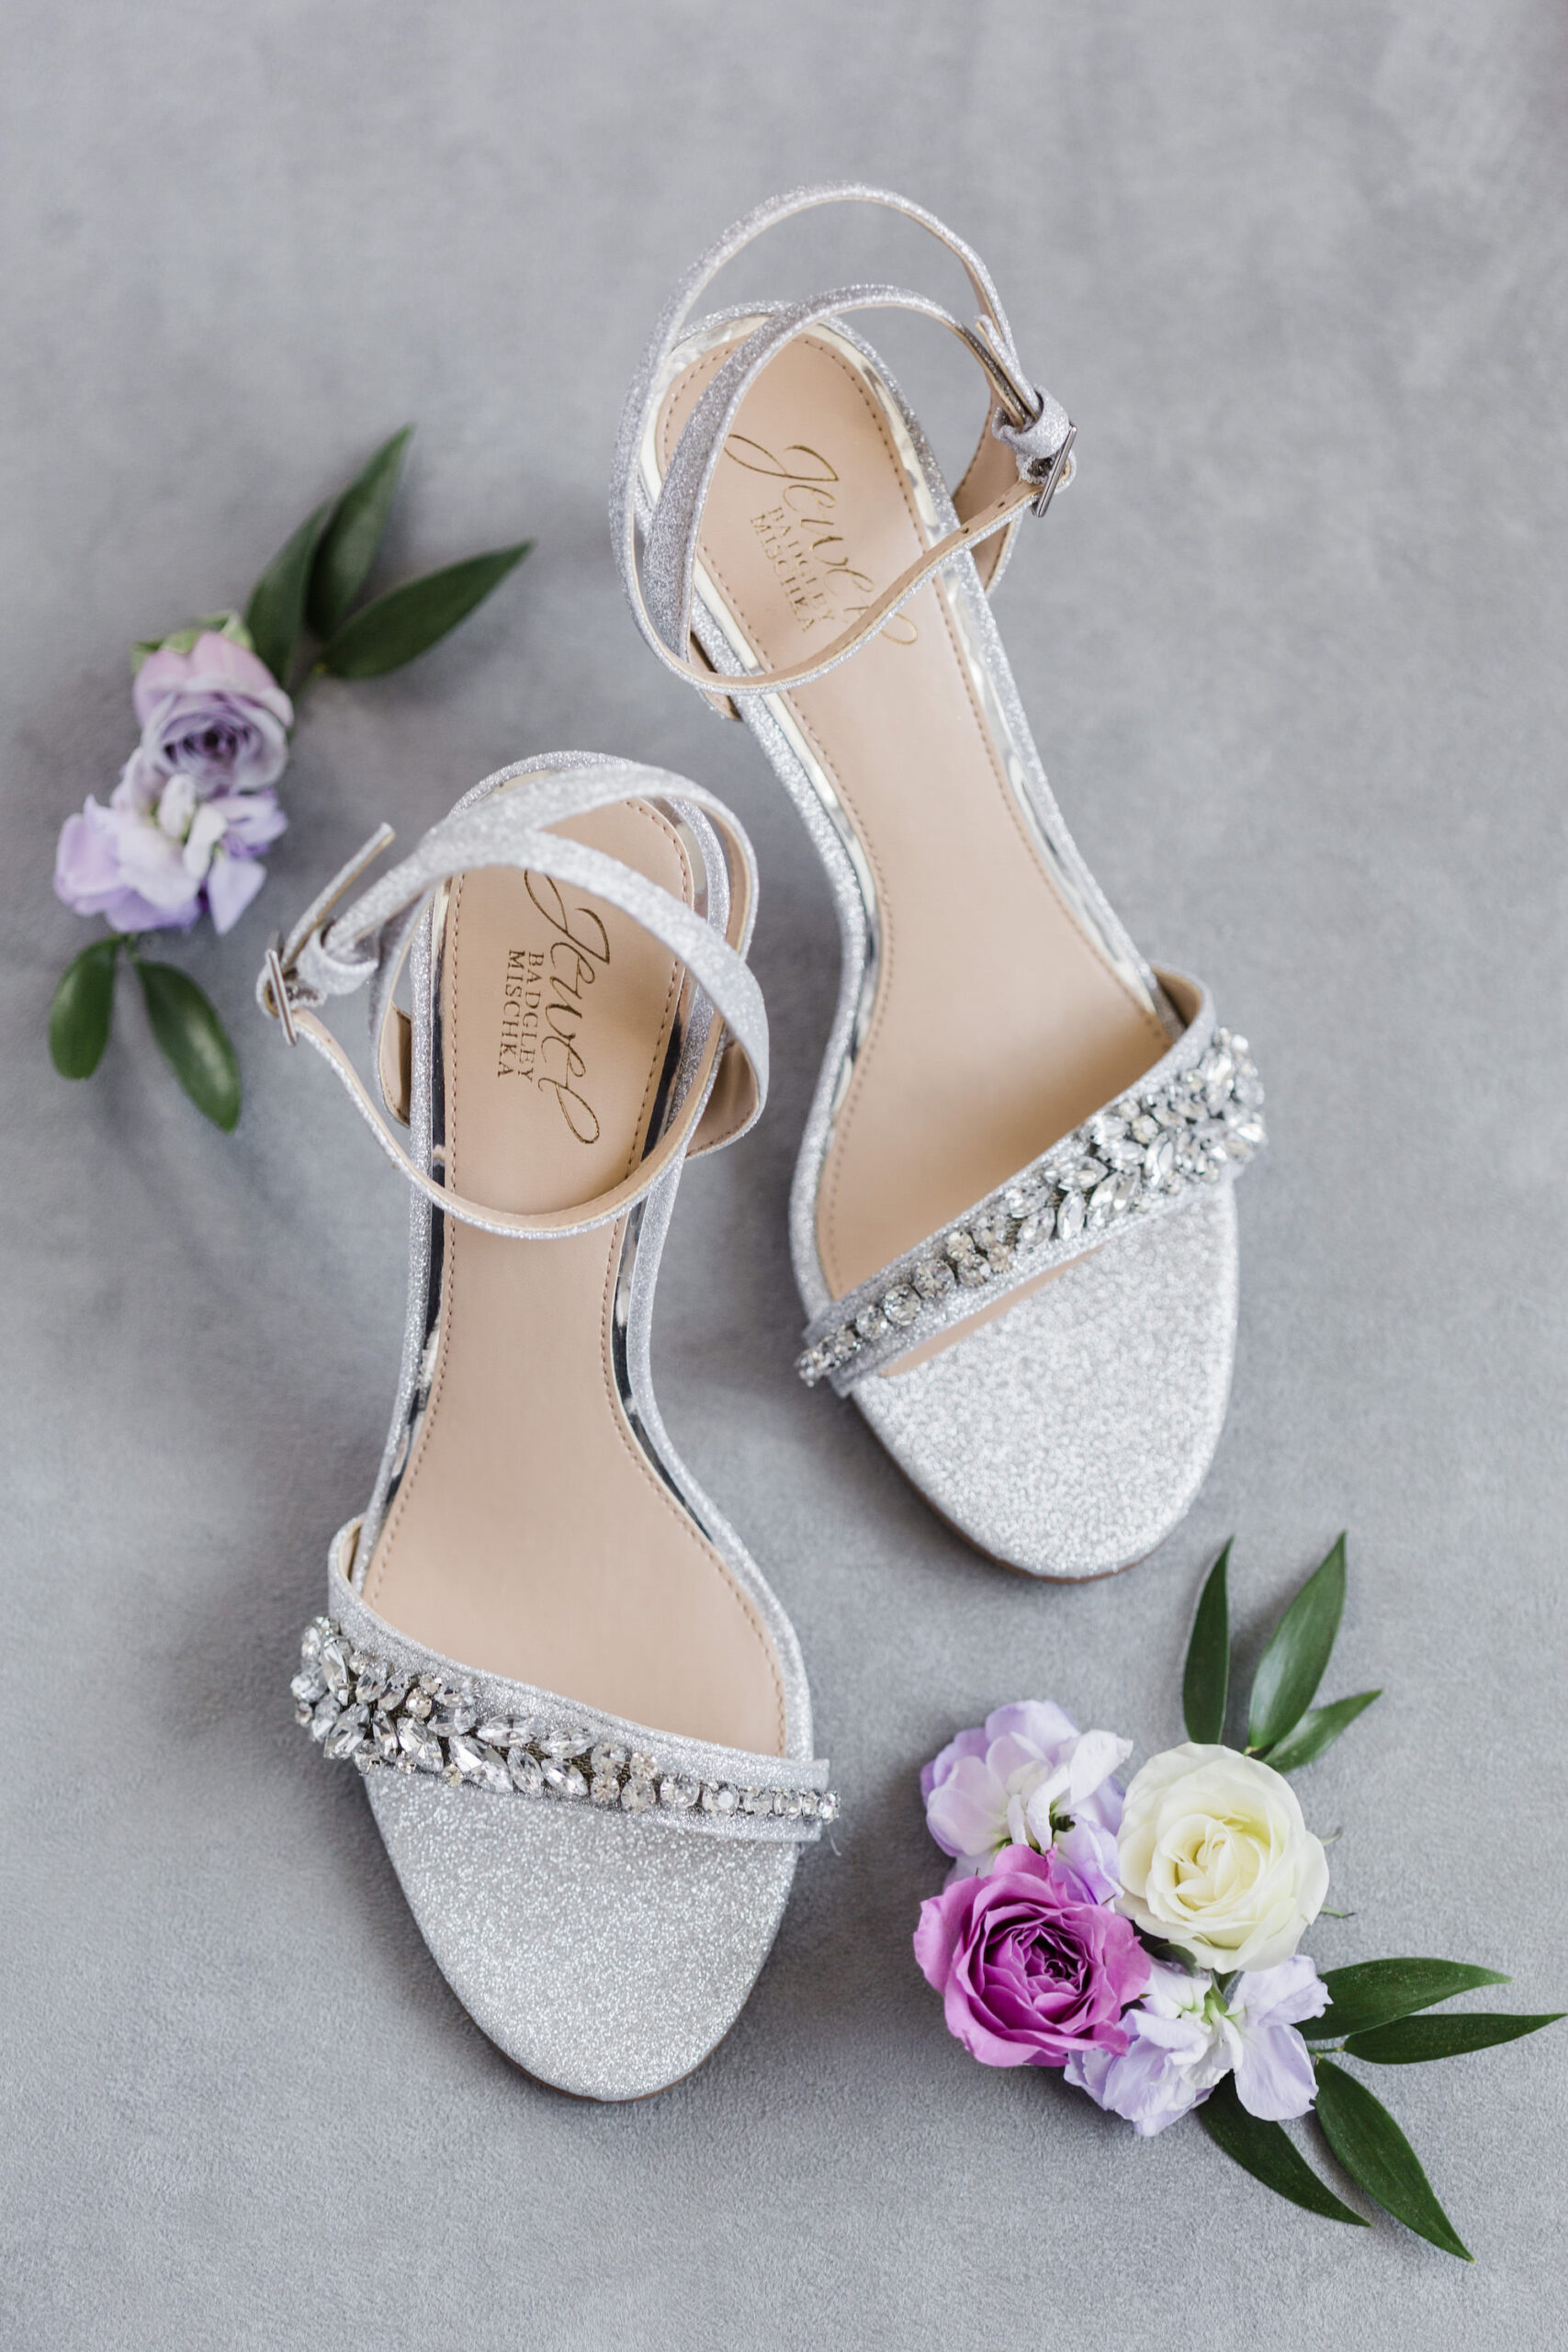 Silver Jewel Badgley Mischka Wedding Shoe Inspiration